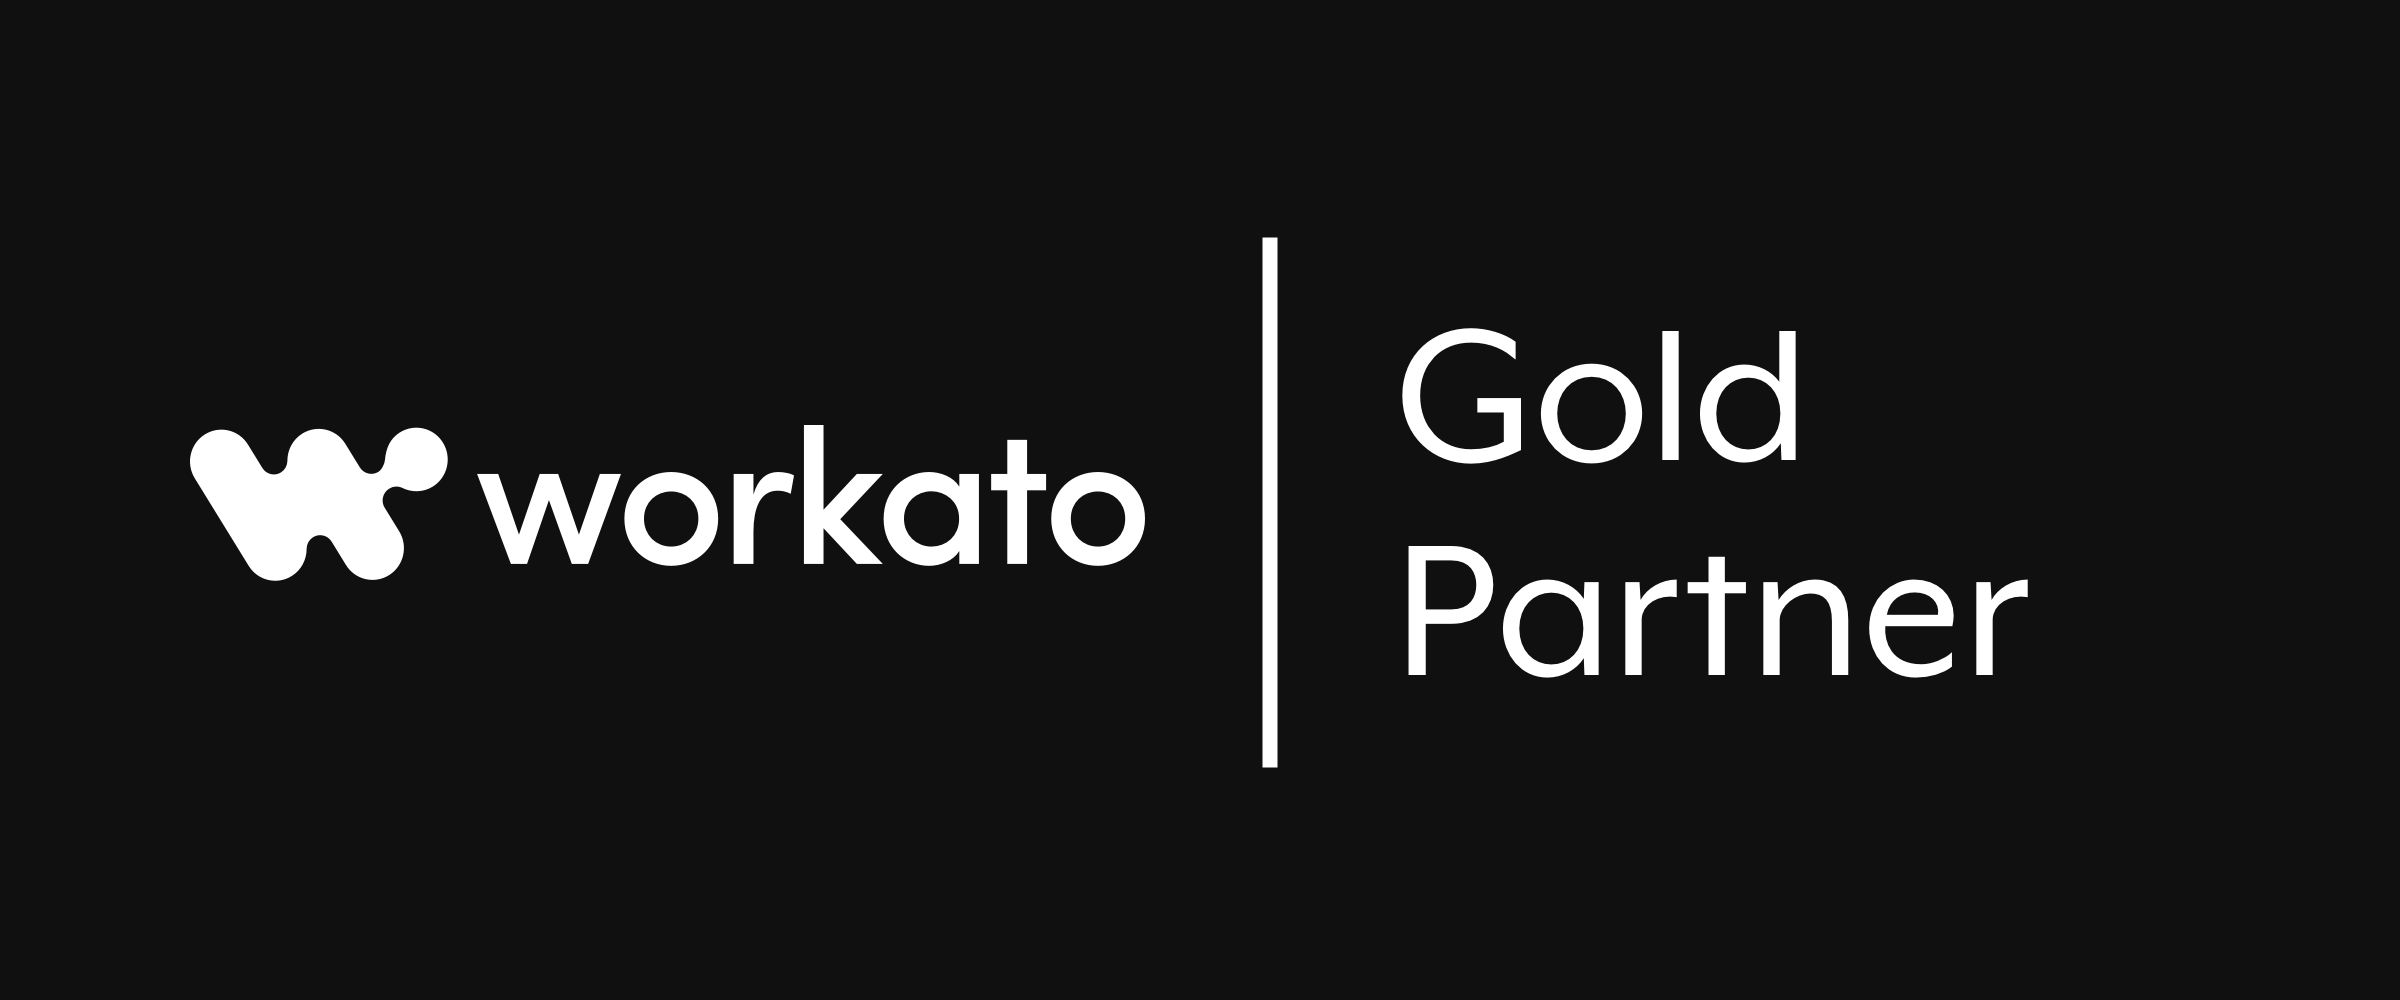 Gold Partner - Black Logo